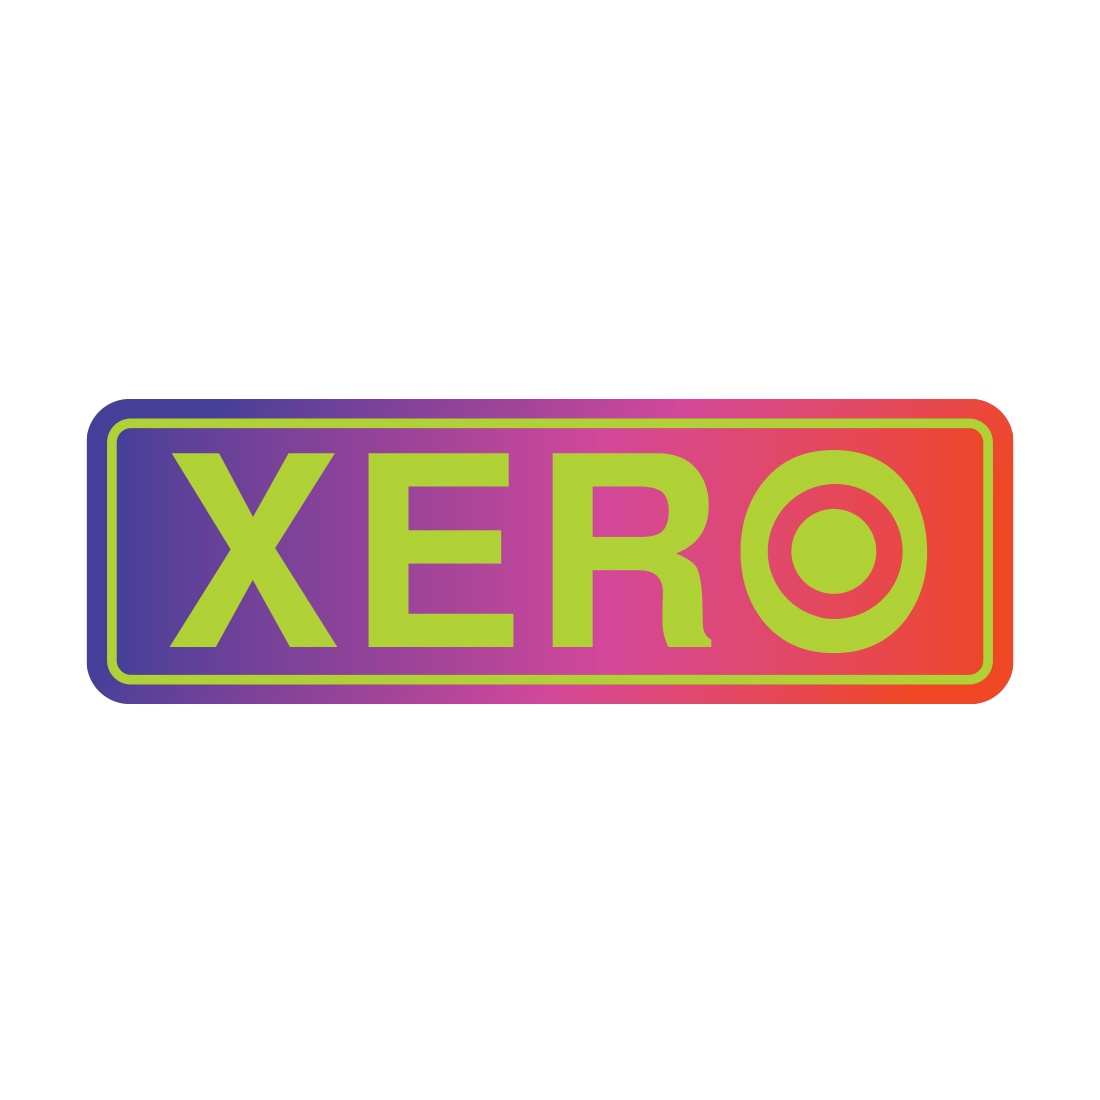 XERO Sticker - The Keys View